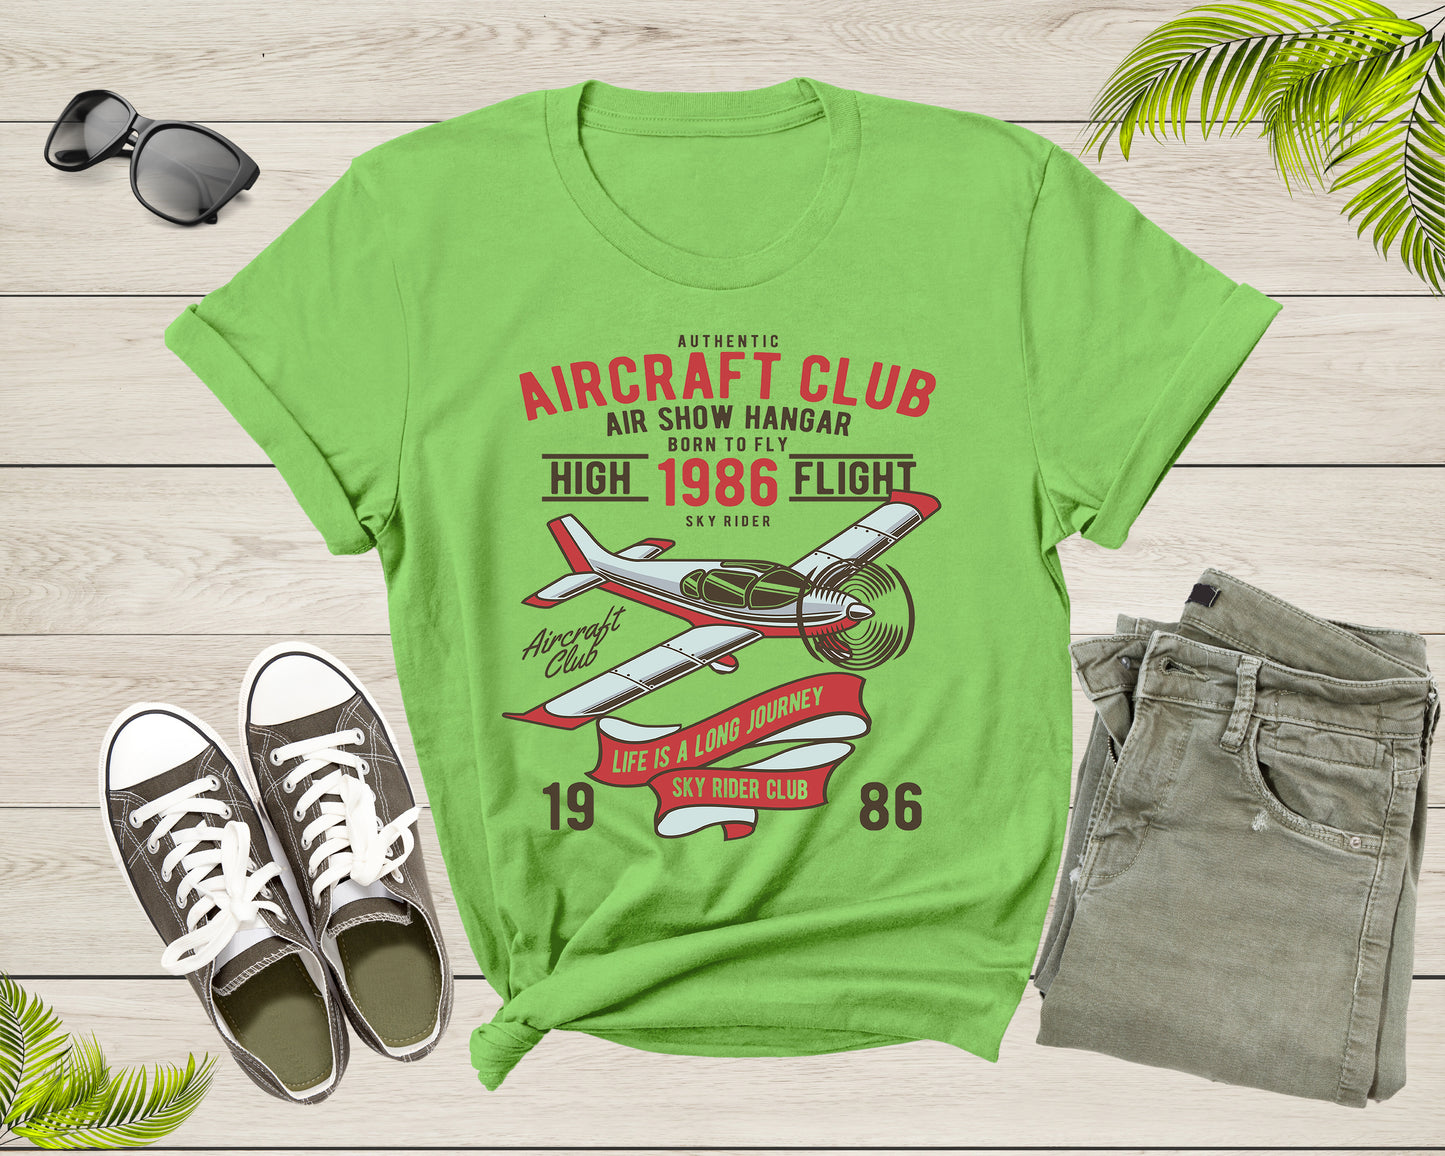 Cool Aircraft Club Plane Fly Airplane for Men Women Kids T-Shirt Plane Shirt for Men Women Kids Boys Girls Teens Pilots Graphic Gift Tshirt